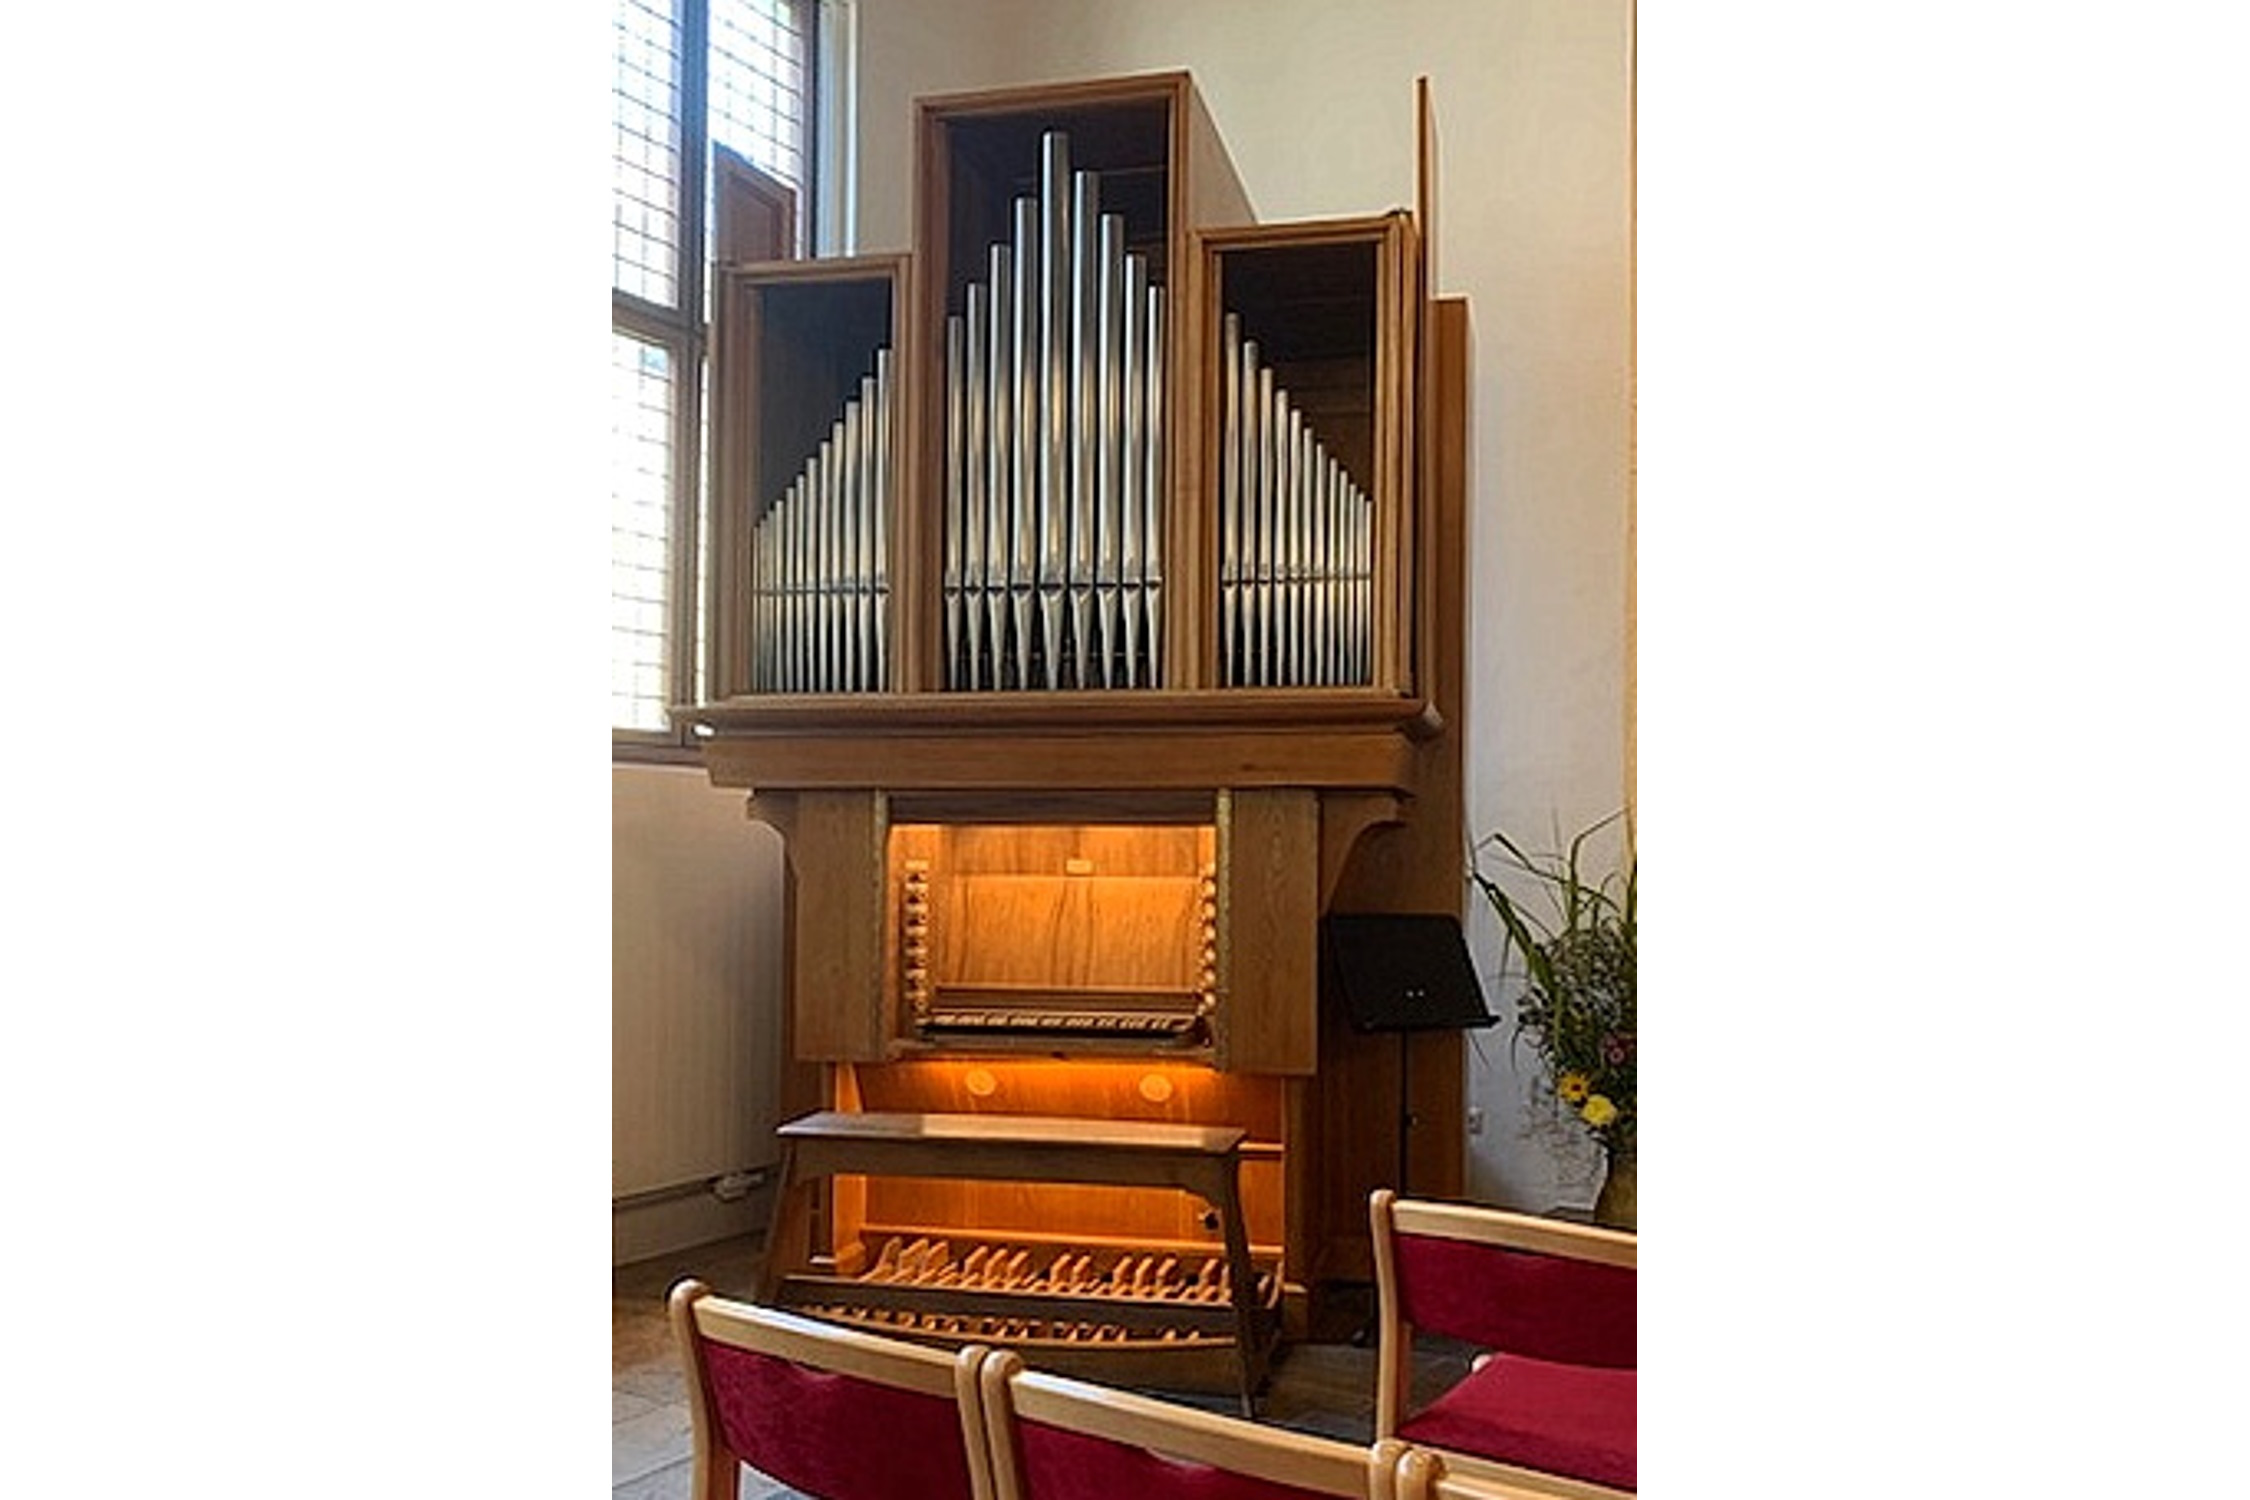 Die Jehmlich-Orgel in der Kirche Borsdorf. Foto: MquadratDD, CC BY-SA 4.0, https://commons.wikimedia.org/w/index.php?curid=130754844